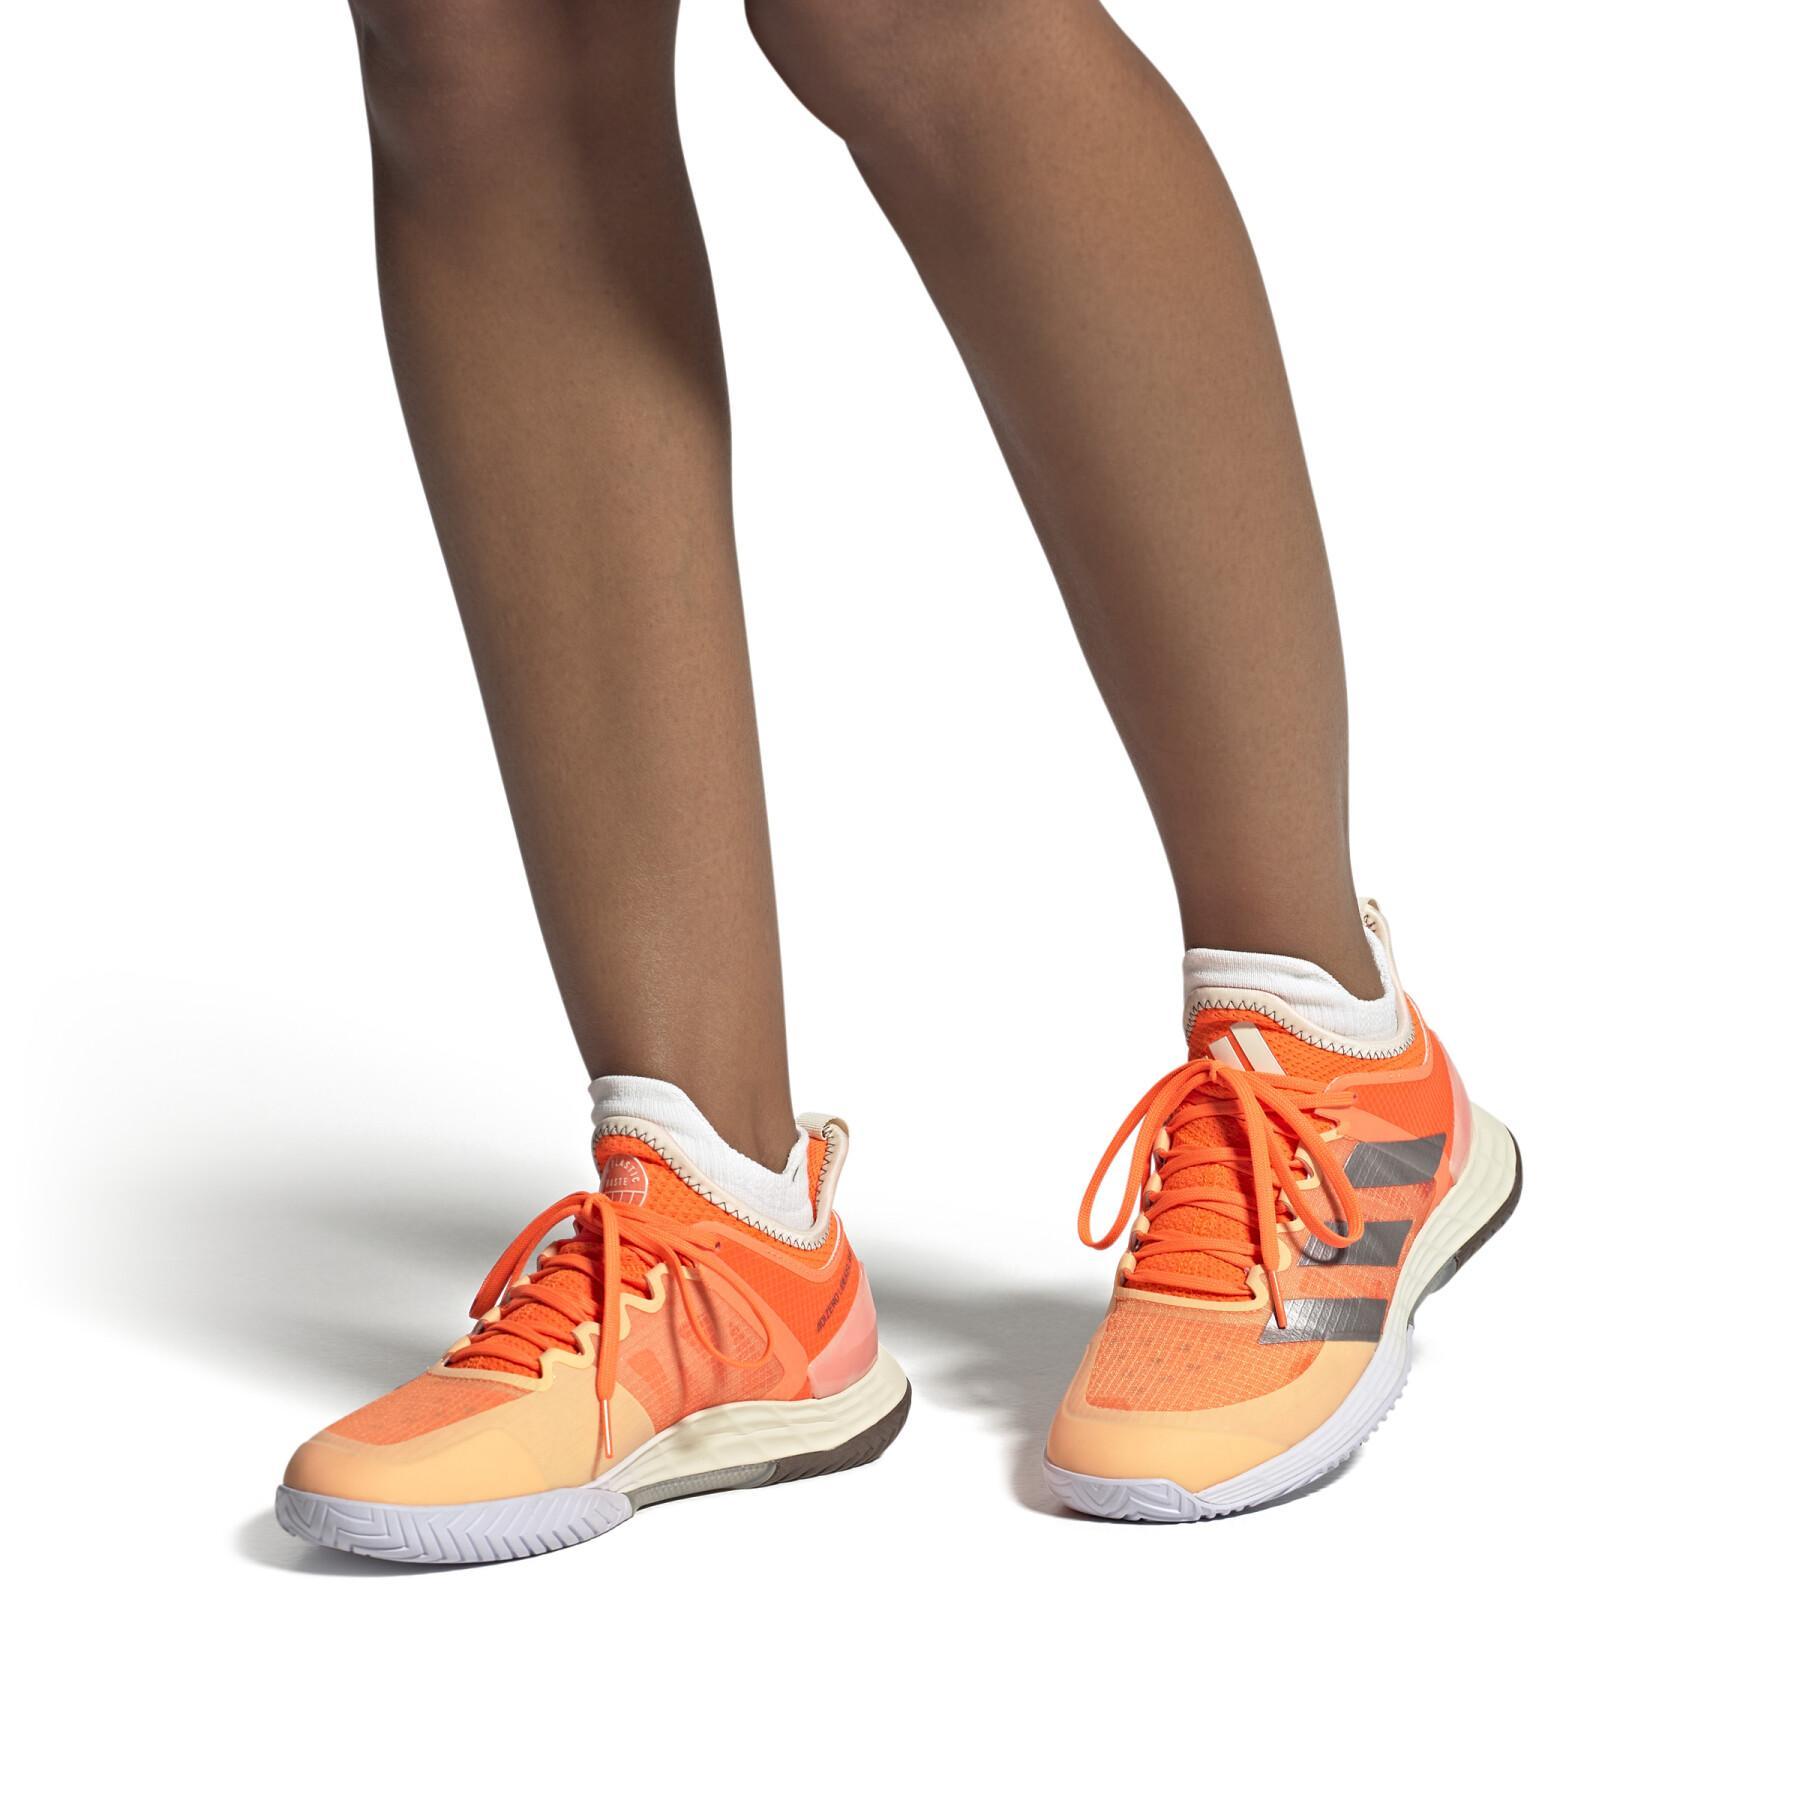 Chaussures de tennis femme adidas Adizero Ubersonic 4